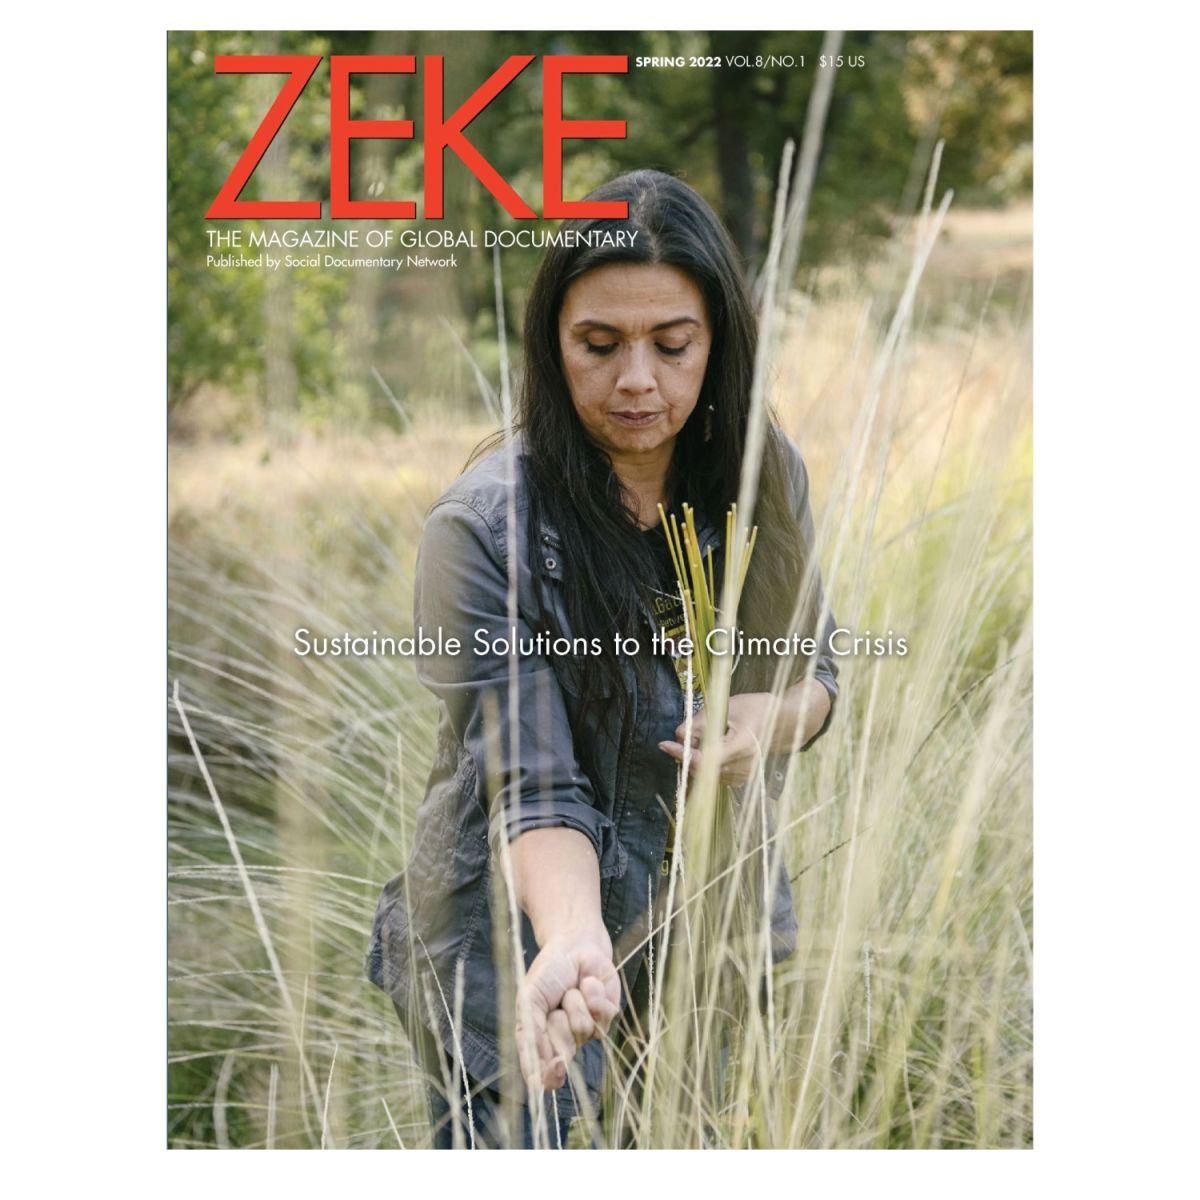 ZEKE The magazine of global documentary - Spring 2022 Vol.8 No.1